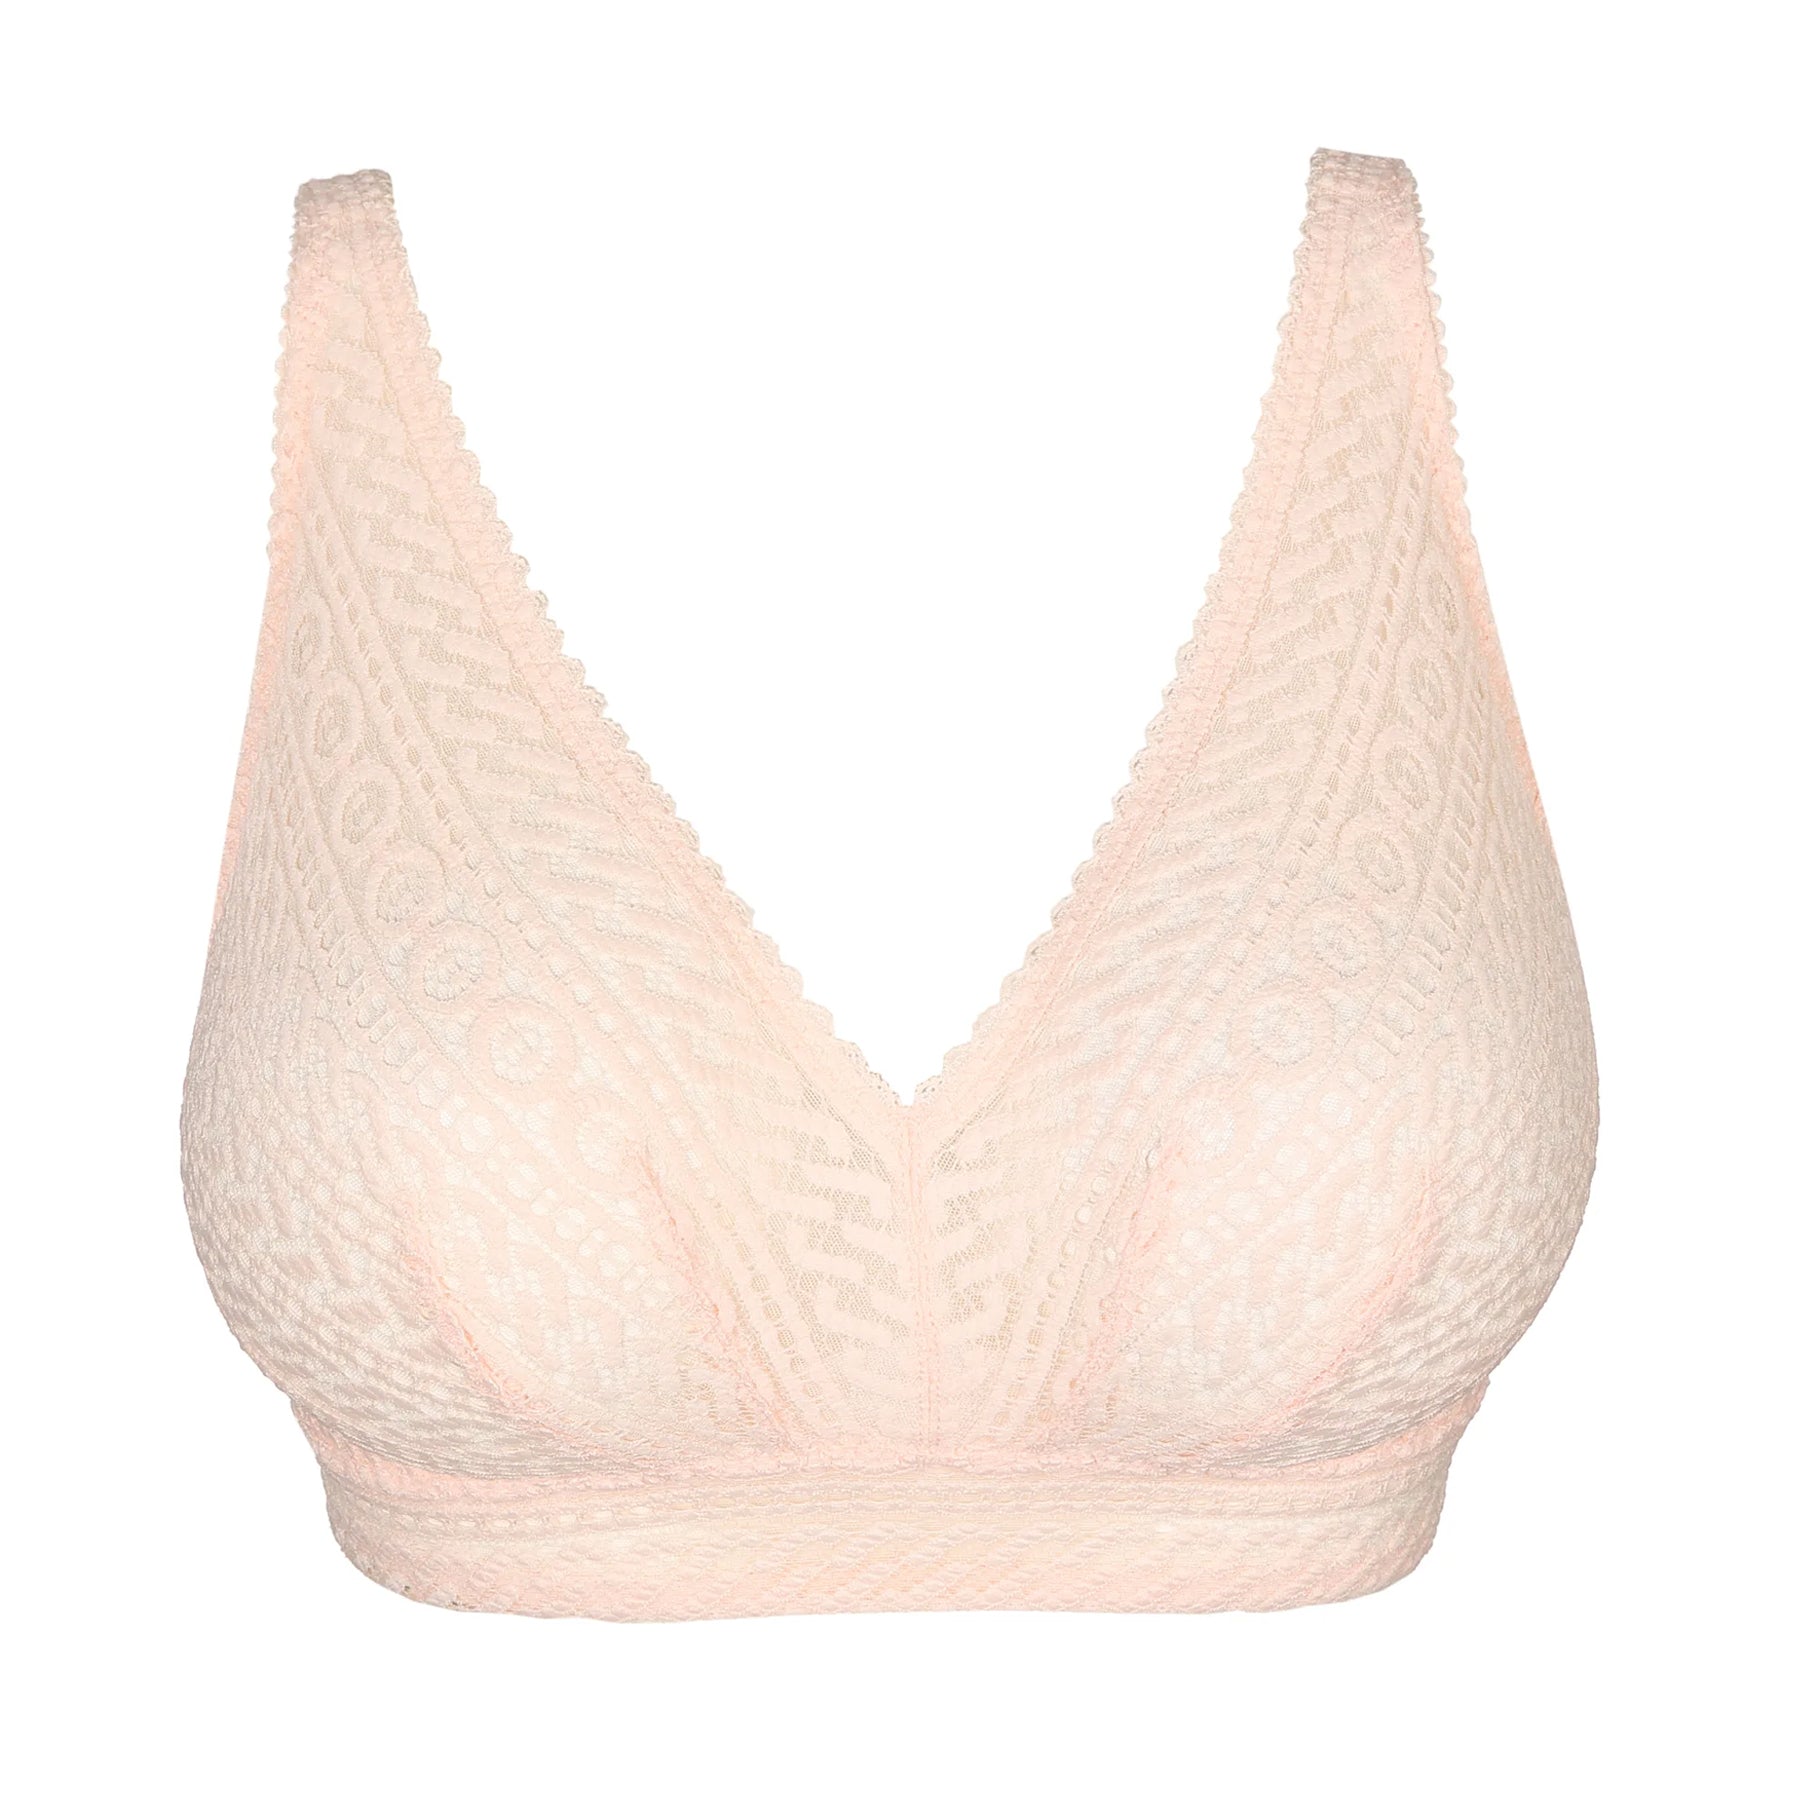 b 36 bra - Buy b 36 bra with free shipping on AliExpress